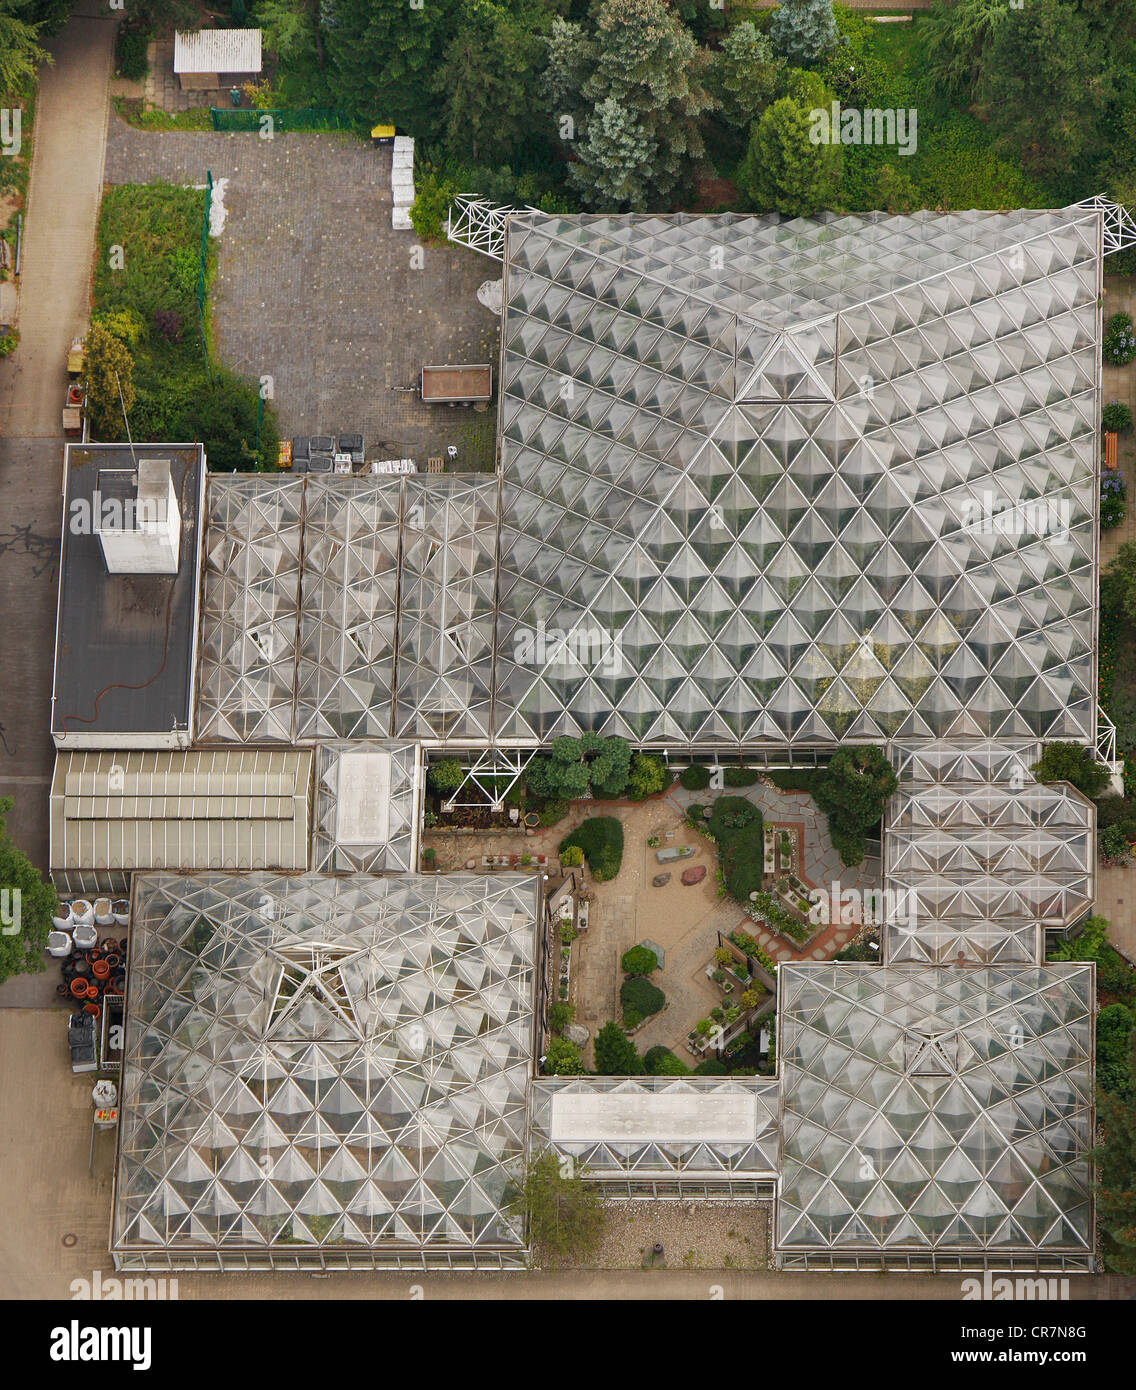 Aerial view, tropical greenhouse, Gruga, Grugapark botanical garden near the Messe Essen exhibition centre, Essen, Ruhr area Stock Photo